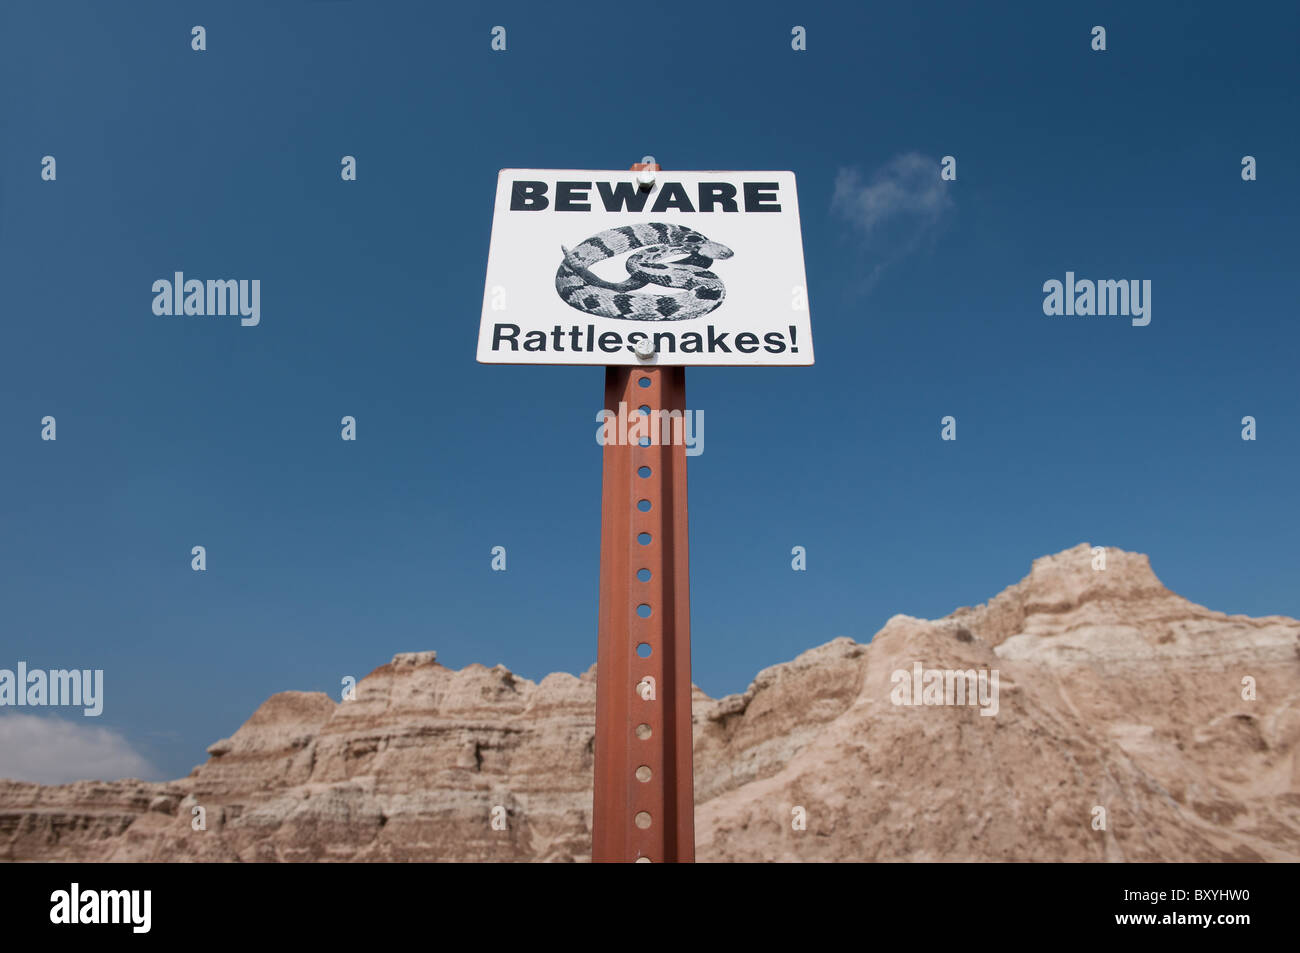 Rattlesnake segno di avvertimento contro sky, mountain in background Foto Stock